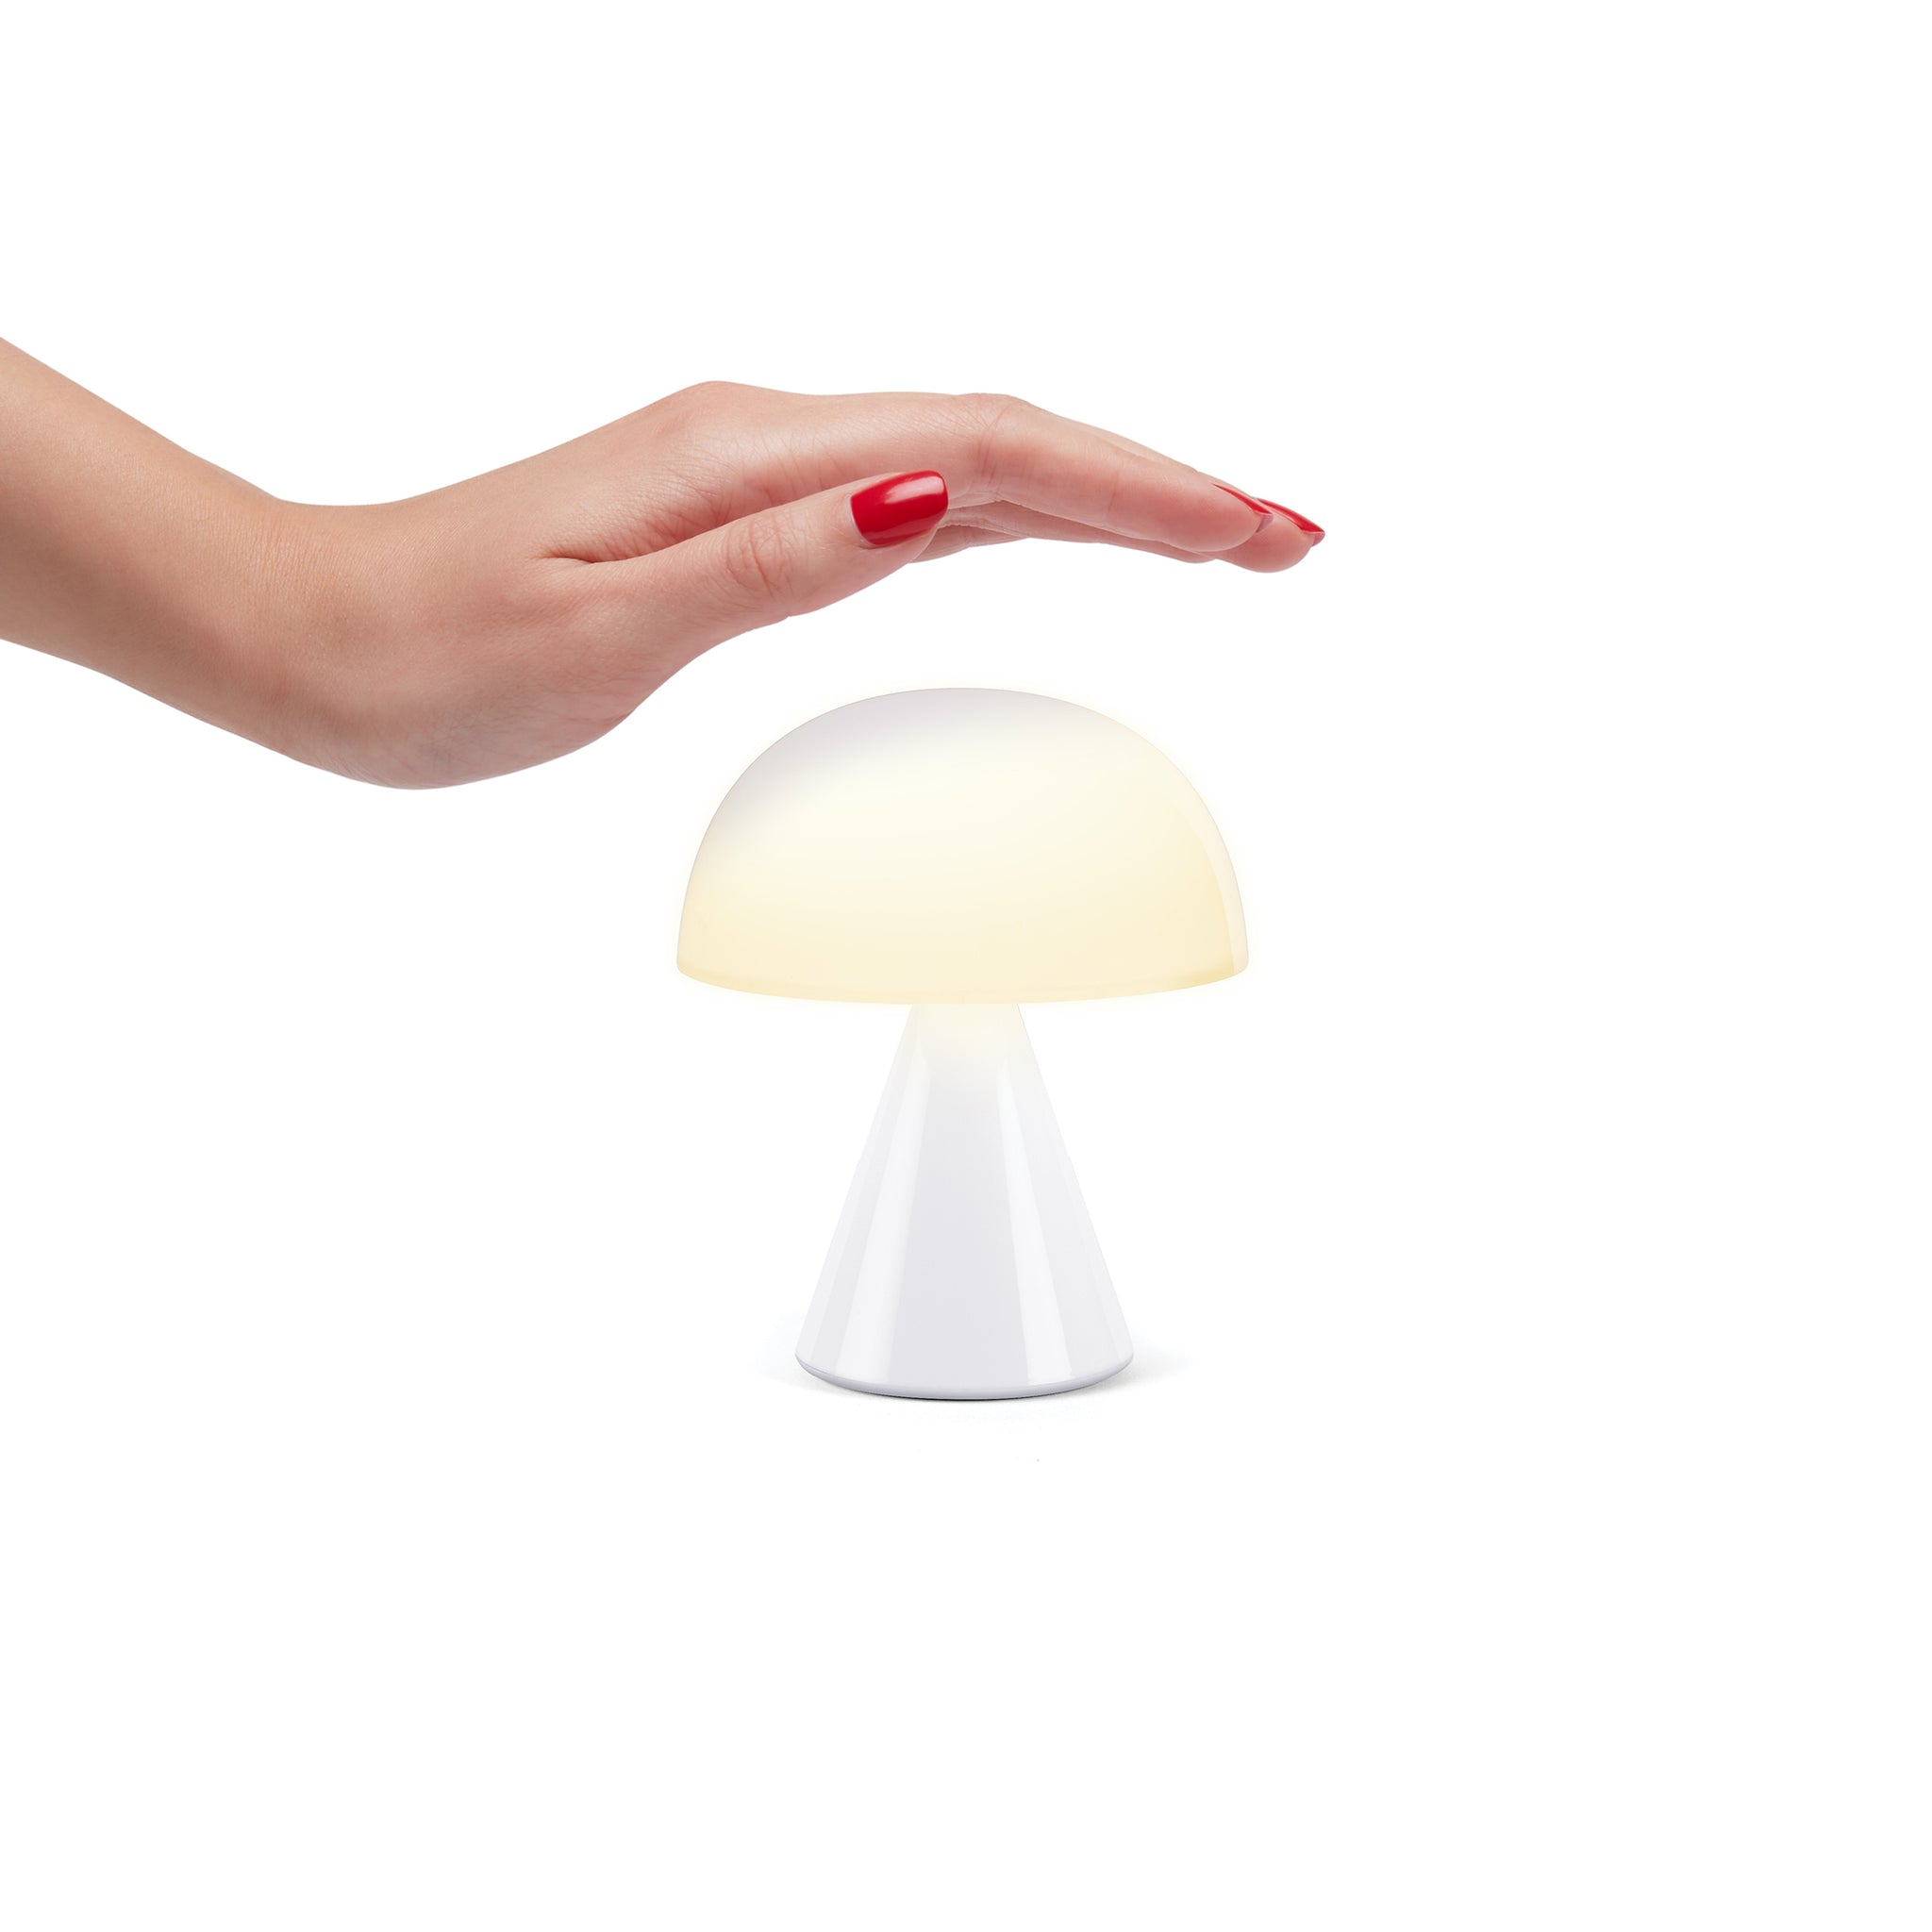 Lexon Mina Medium Glossy White│Oplaadbare LED-Lamp│art. LH64WG│bediening met hand boven lamp